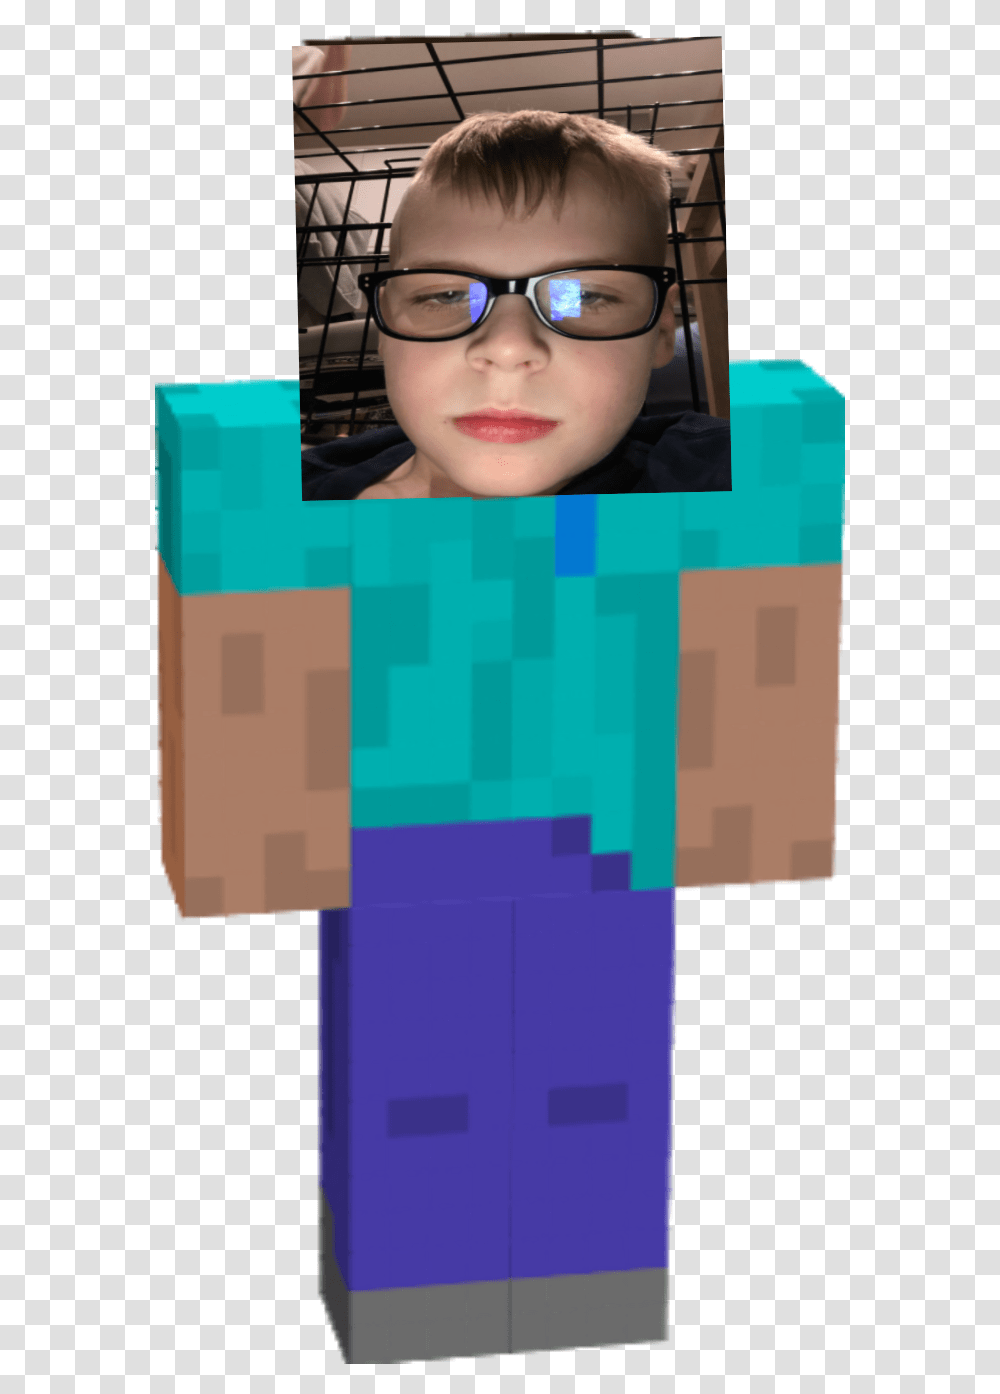 Steve Minecraft Meme Noob Original De Minecraft, Person, Glasses, Face, Head Transparent Png